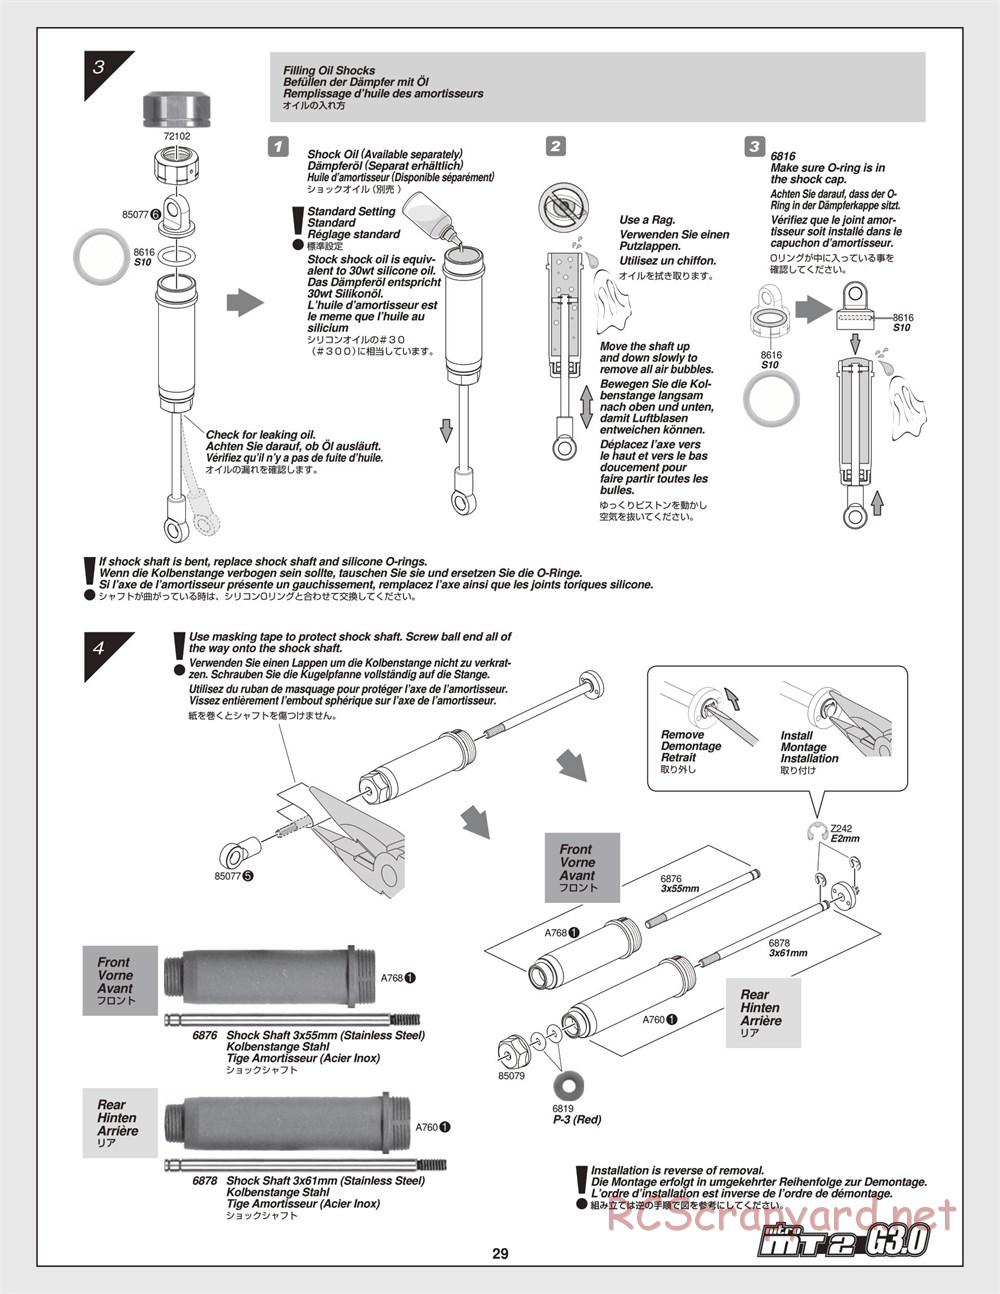 HPI - Nitro MT2 G3.0 - Manual - Page 29